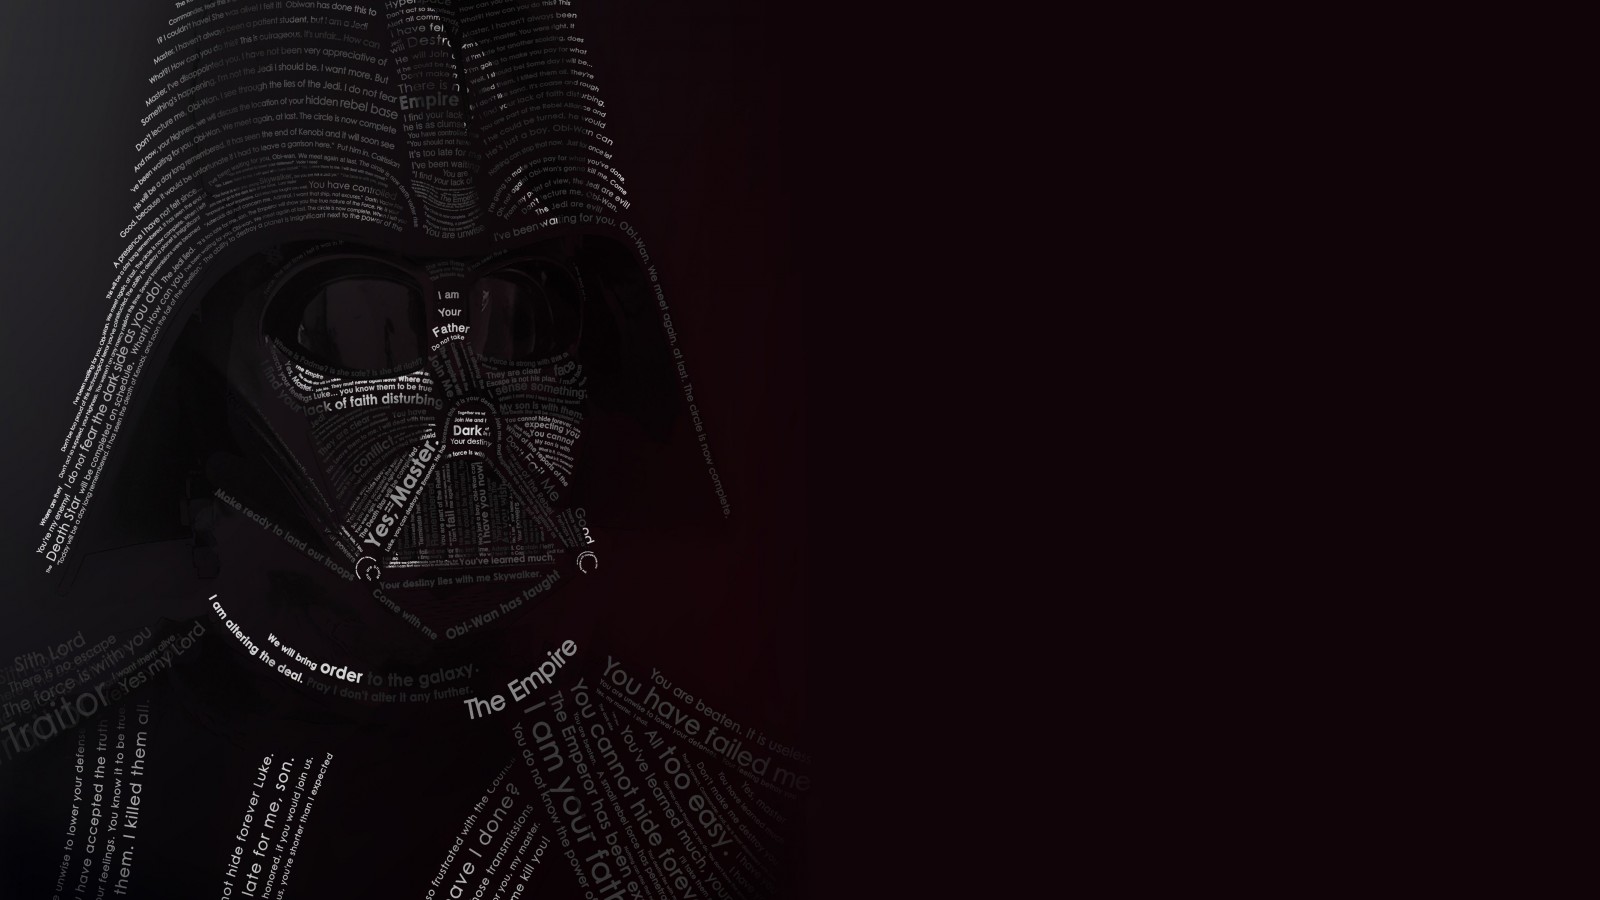 Darth Vader Typographic Portrait Wallpaper for Desktop 1600x900